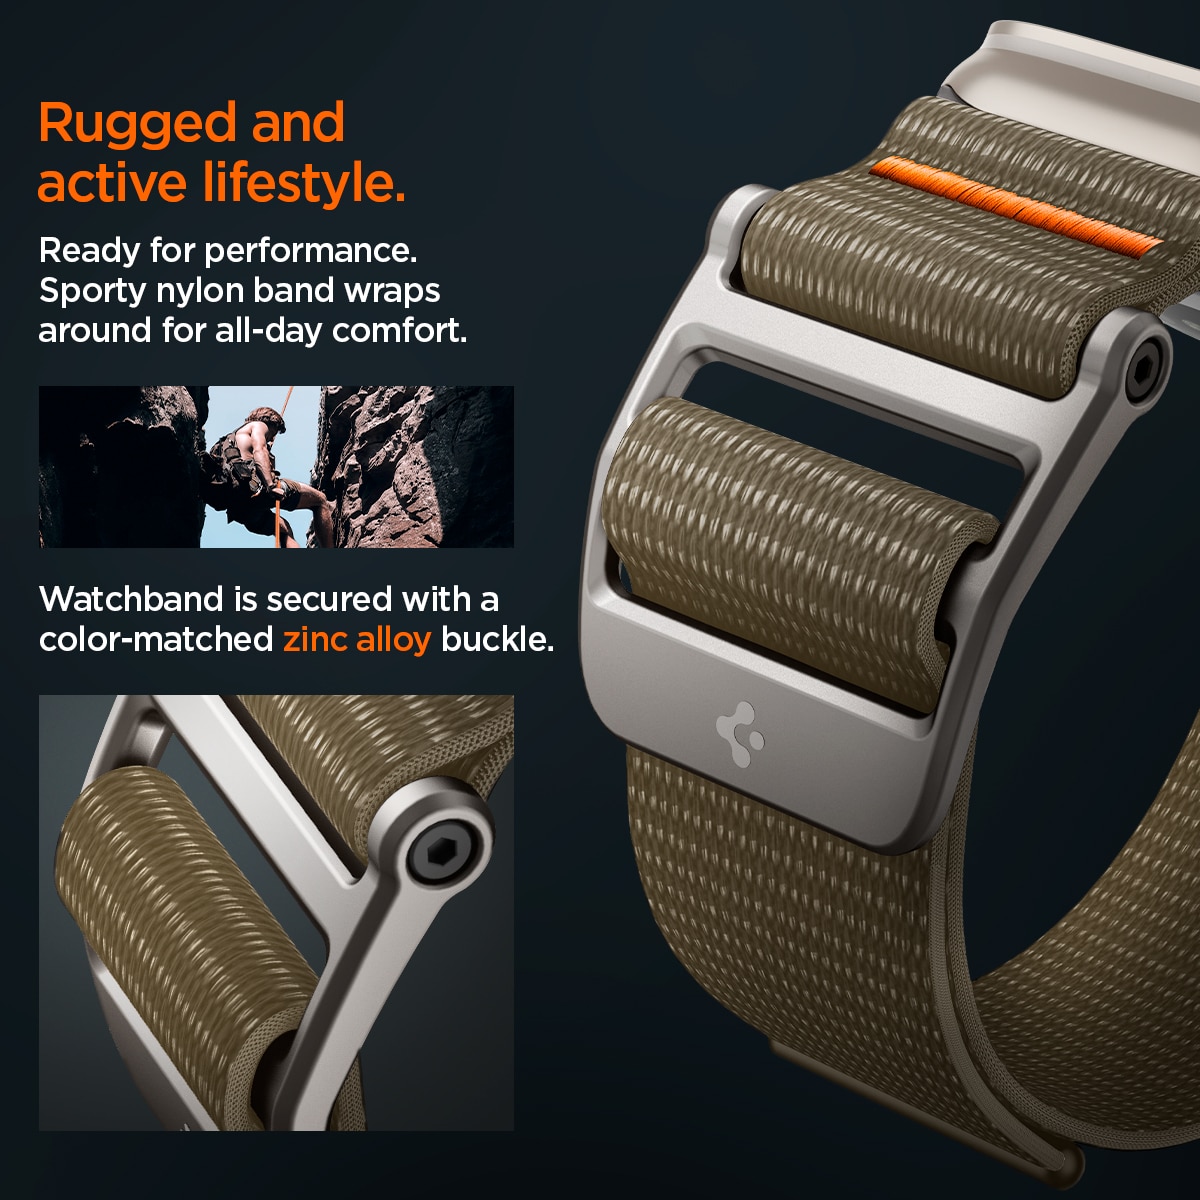 Apple Watch Ultra 2 49mm DuraPro Flex Ultra Khaki